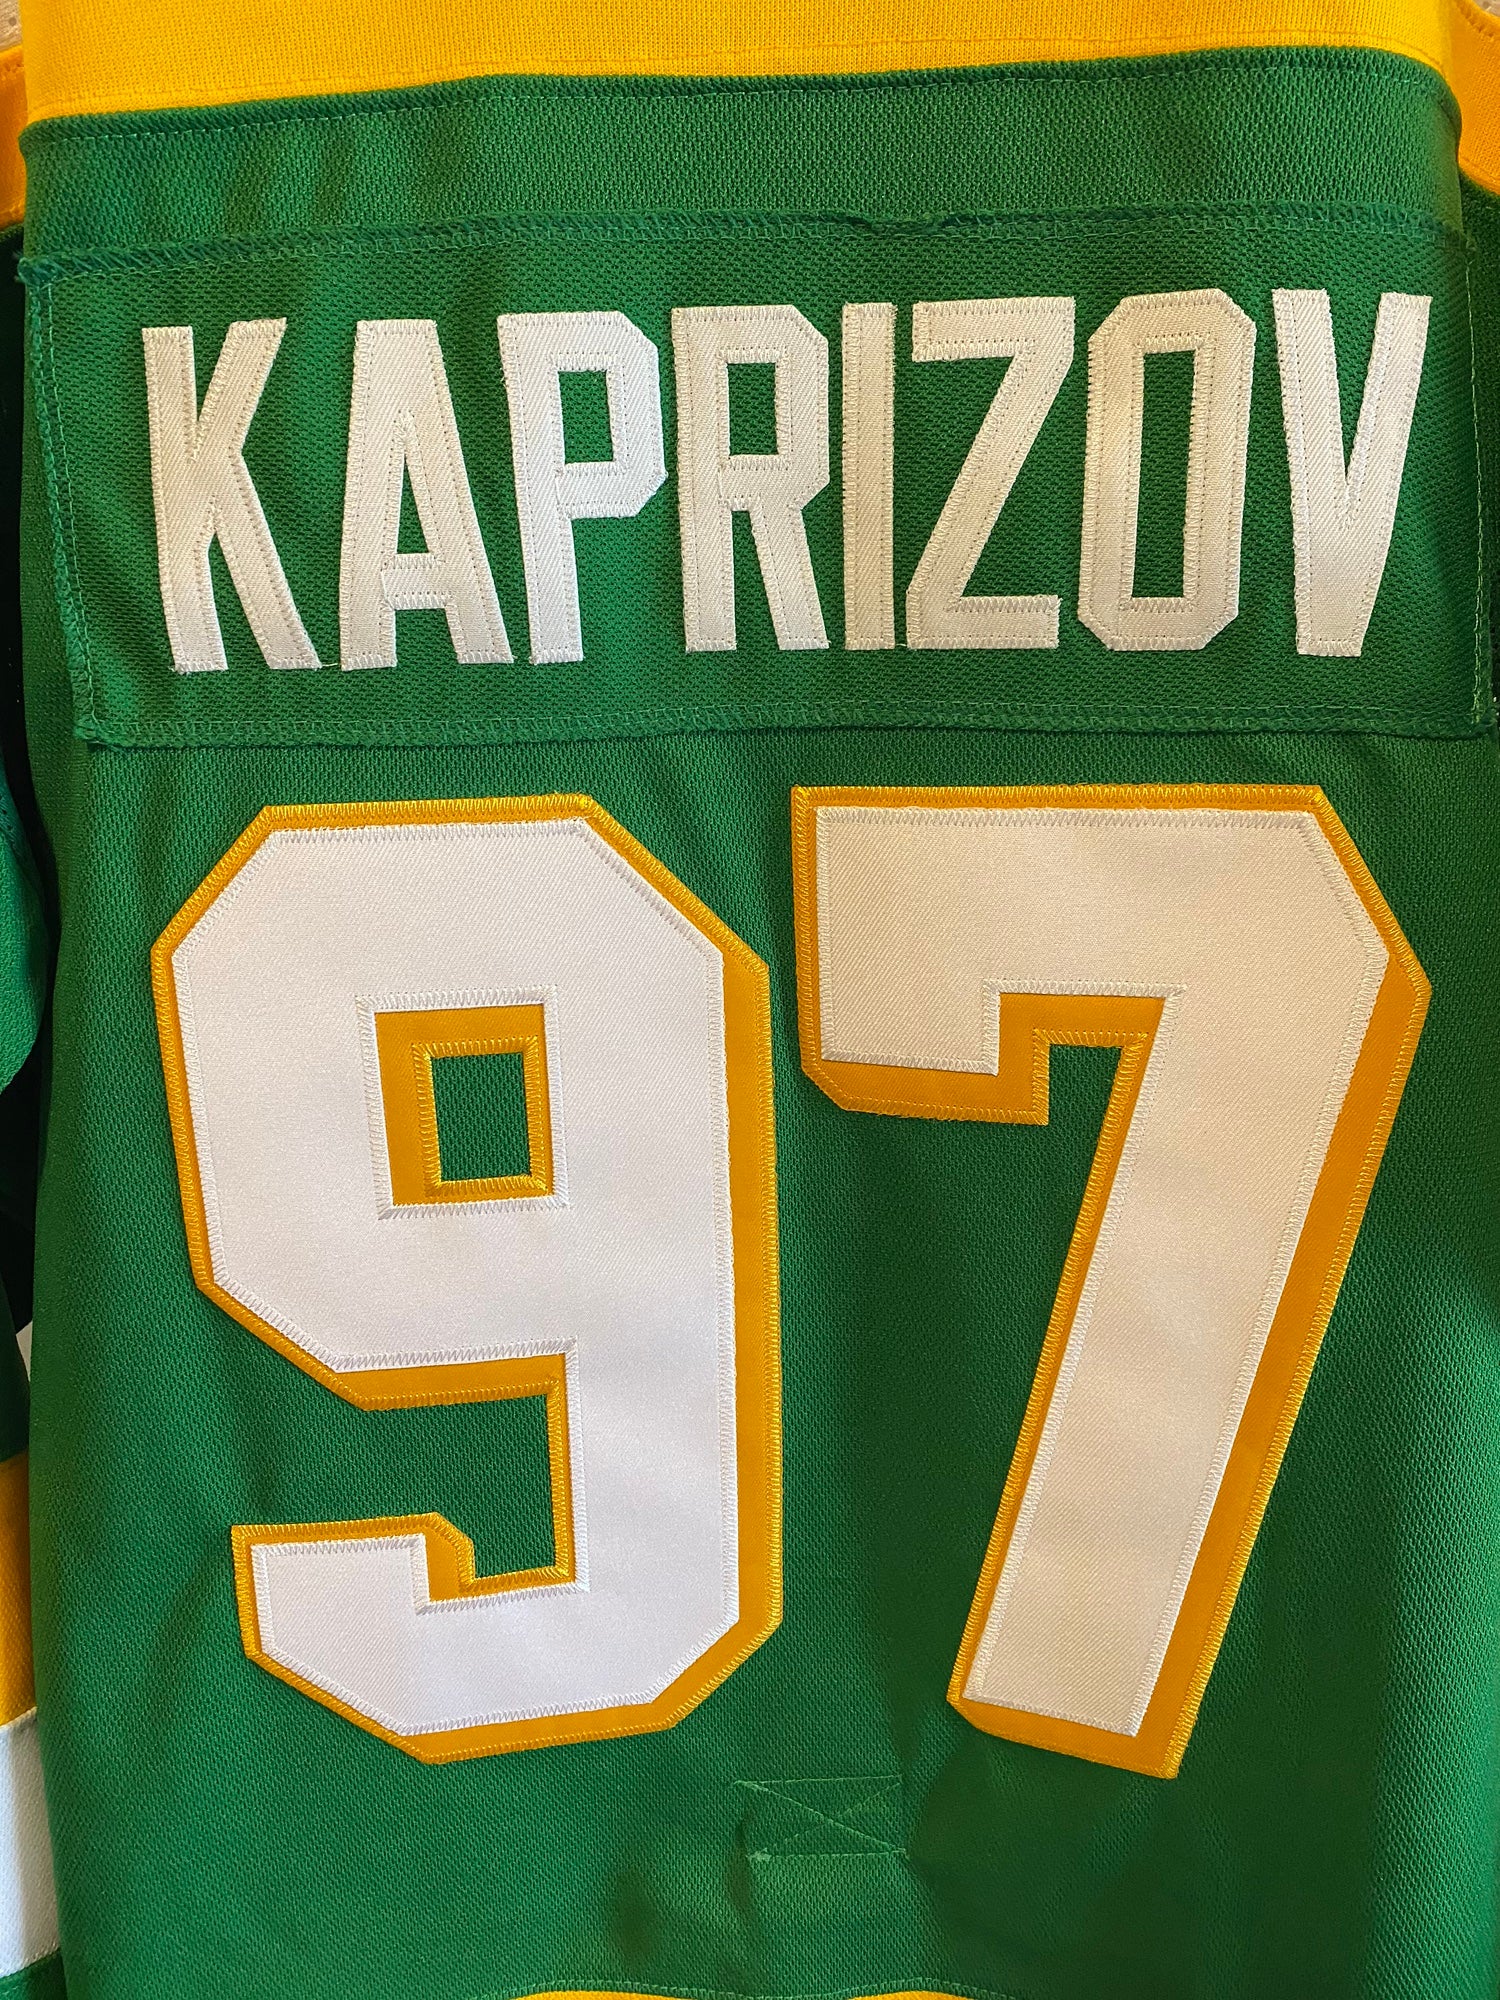 Shirts, Mens Kirill Kaprizov Minnesota Wild Reverse Retro Jersey